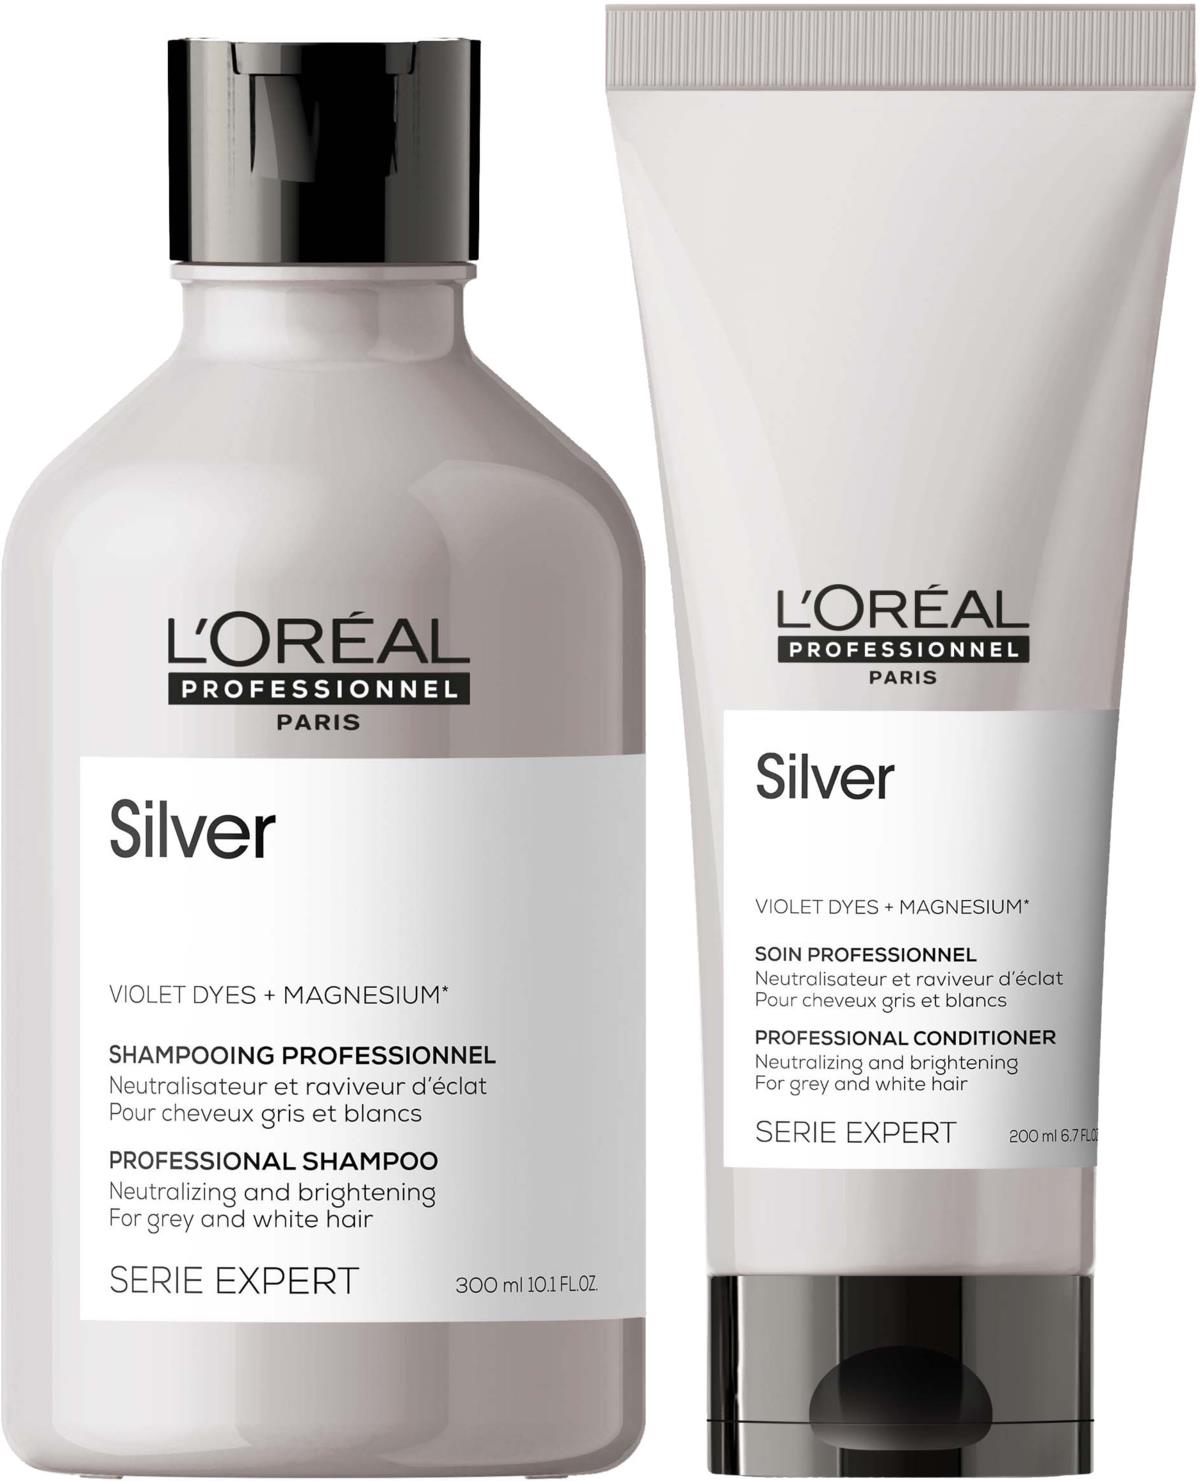 L'Oréal Professionnel Silver Duo lyko.com